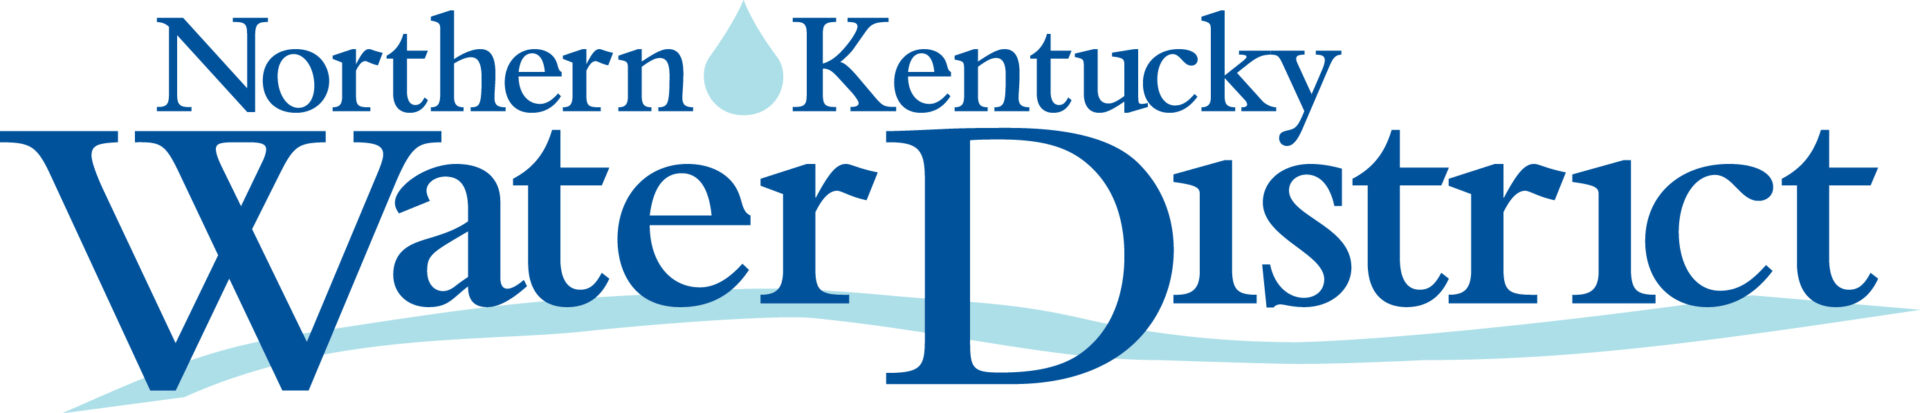 Northern Kentucky Water District logo